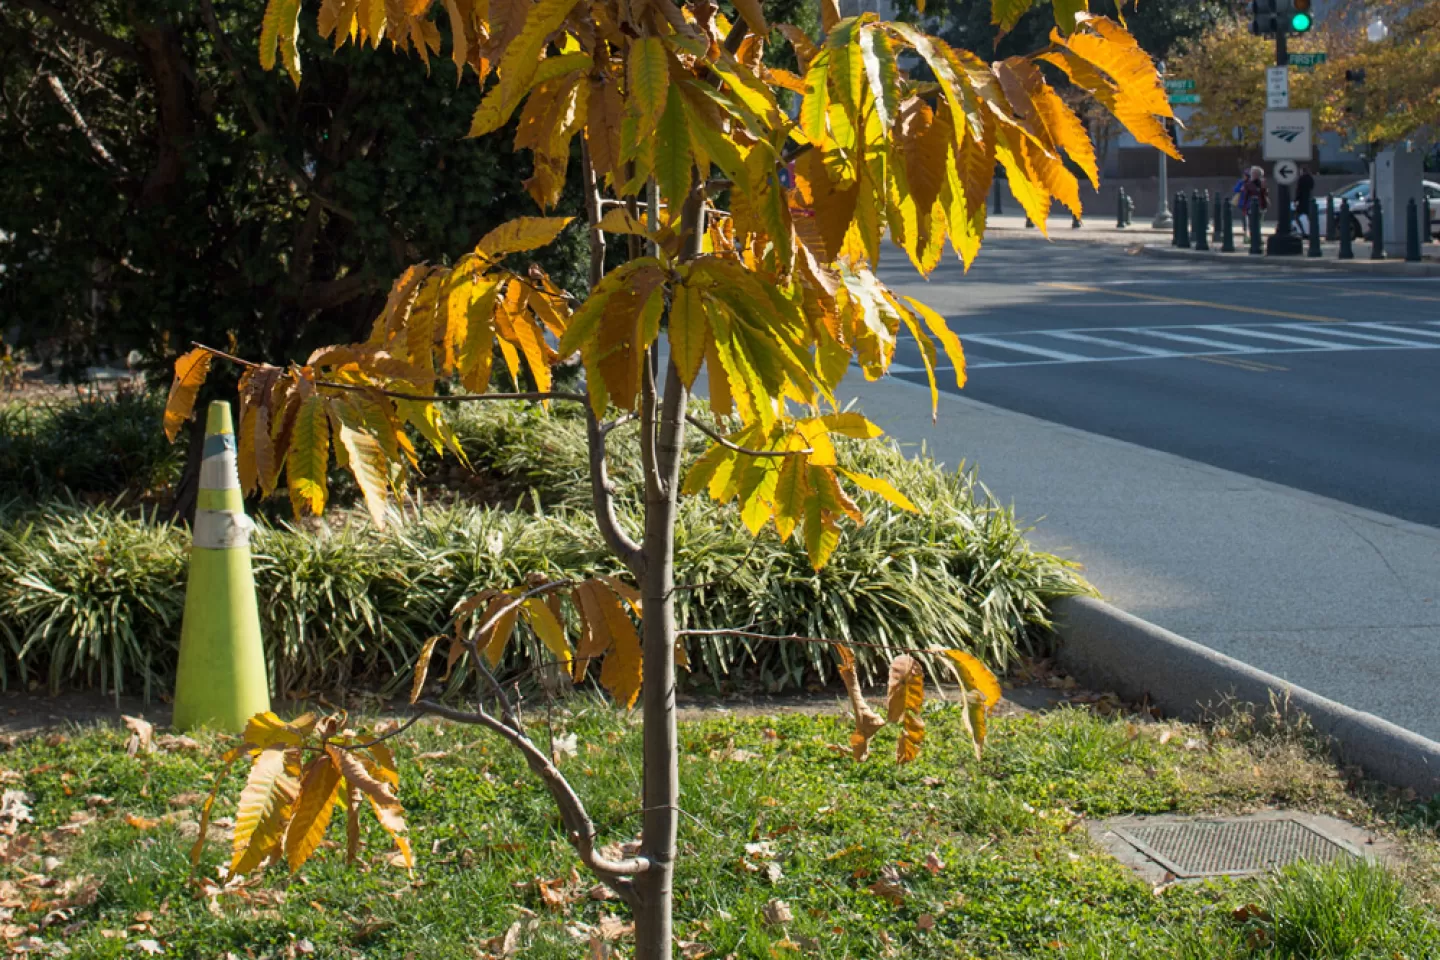 Representative Jack Murtha Tree in fall.